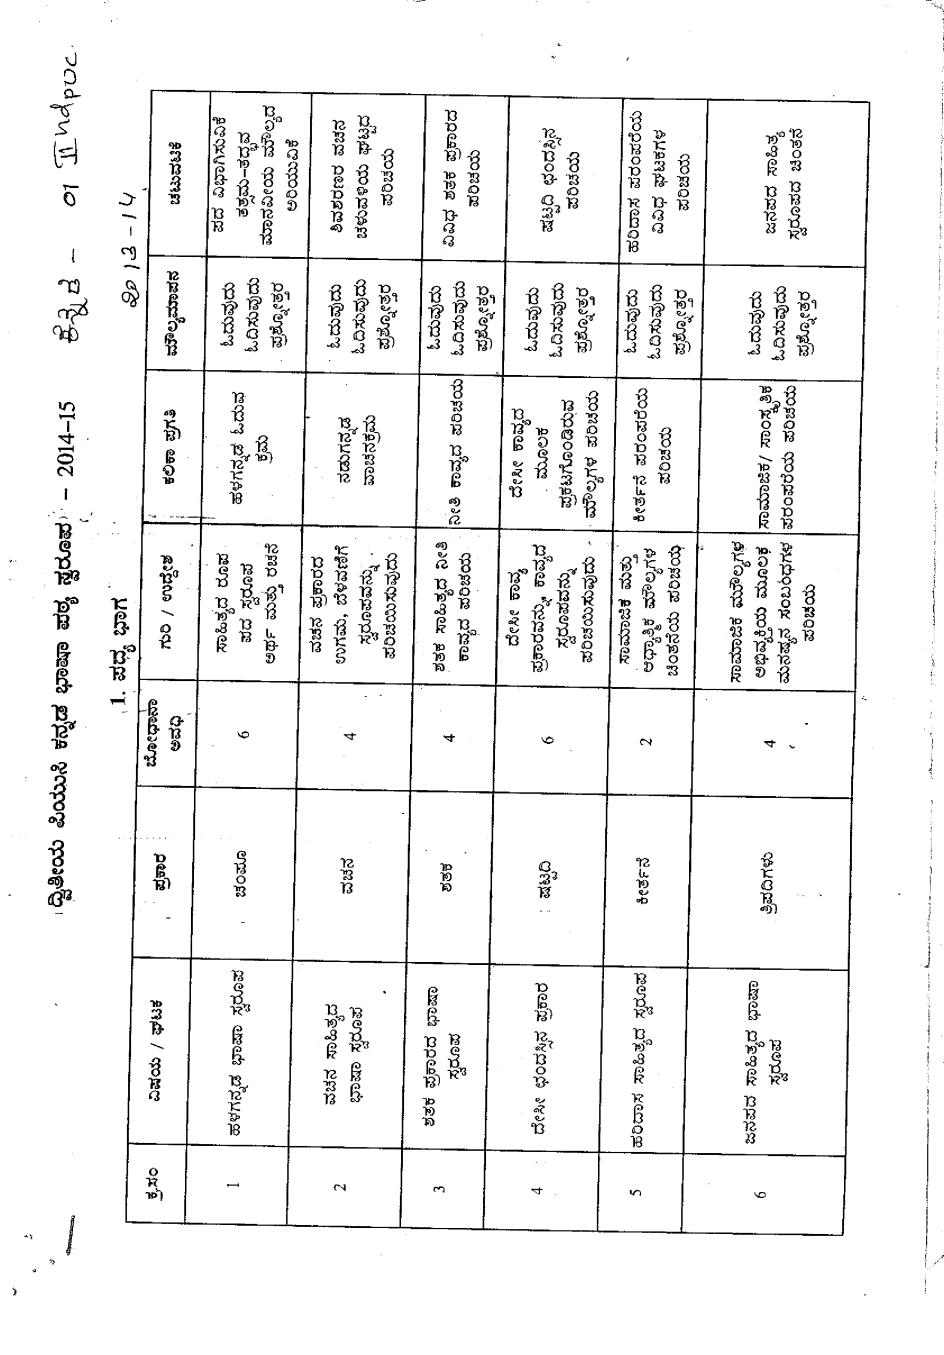 2nd PUC Syllabus for Kannada - Page 1